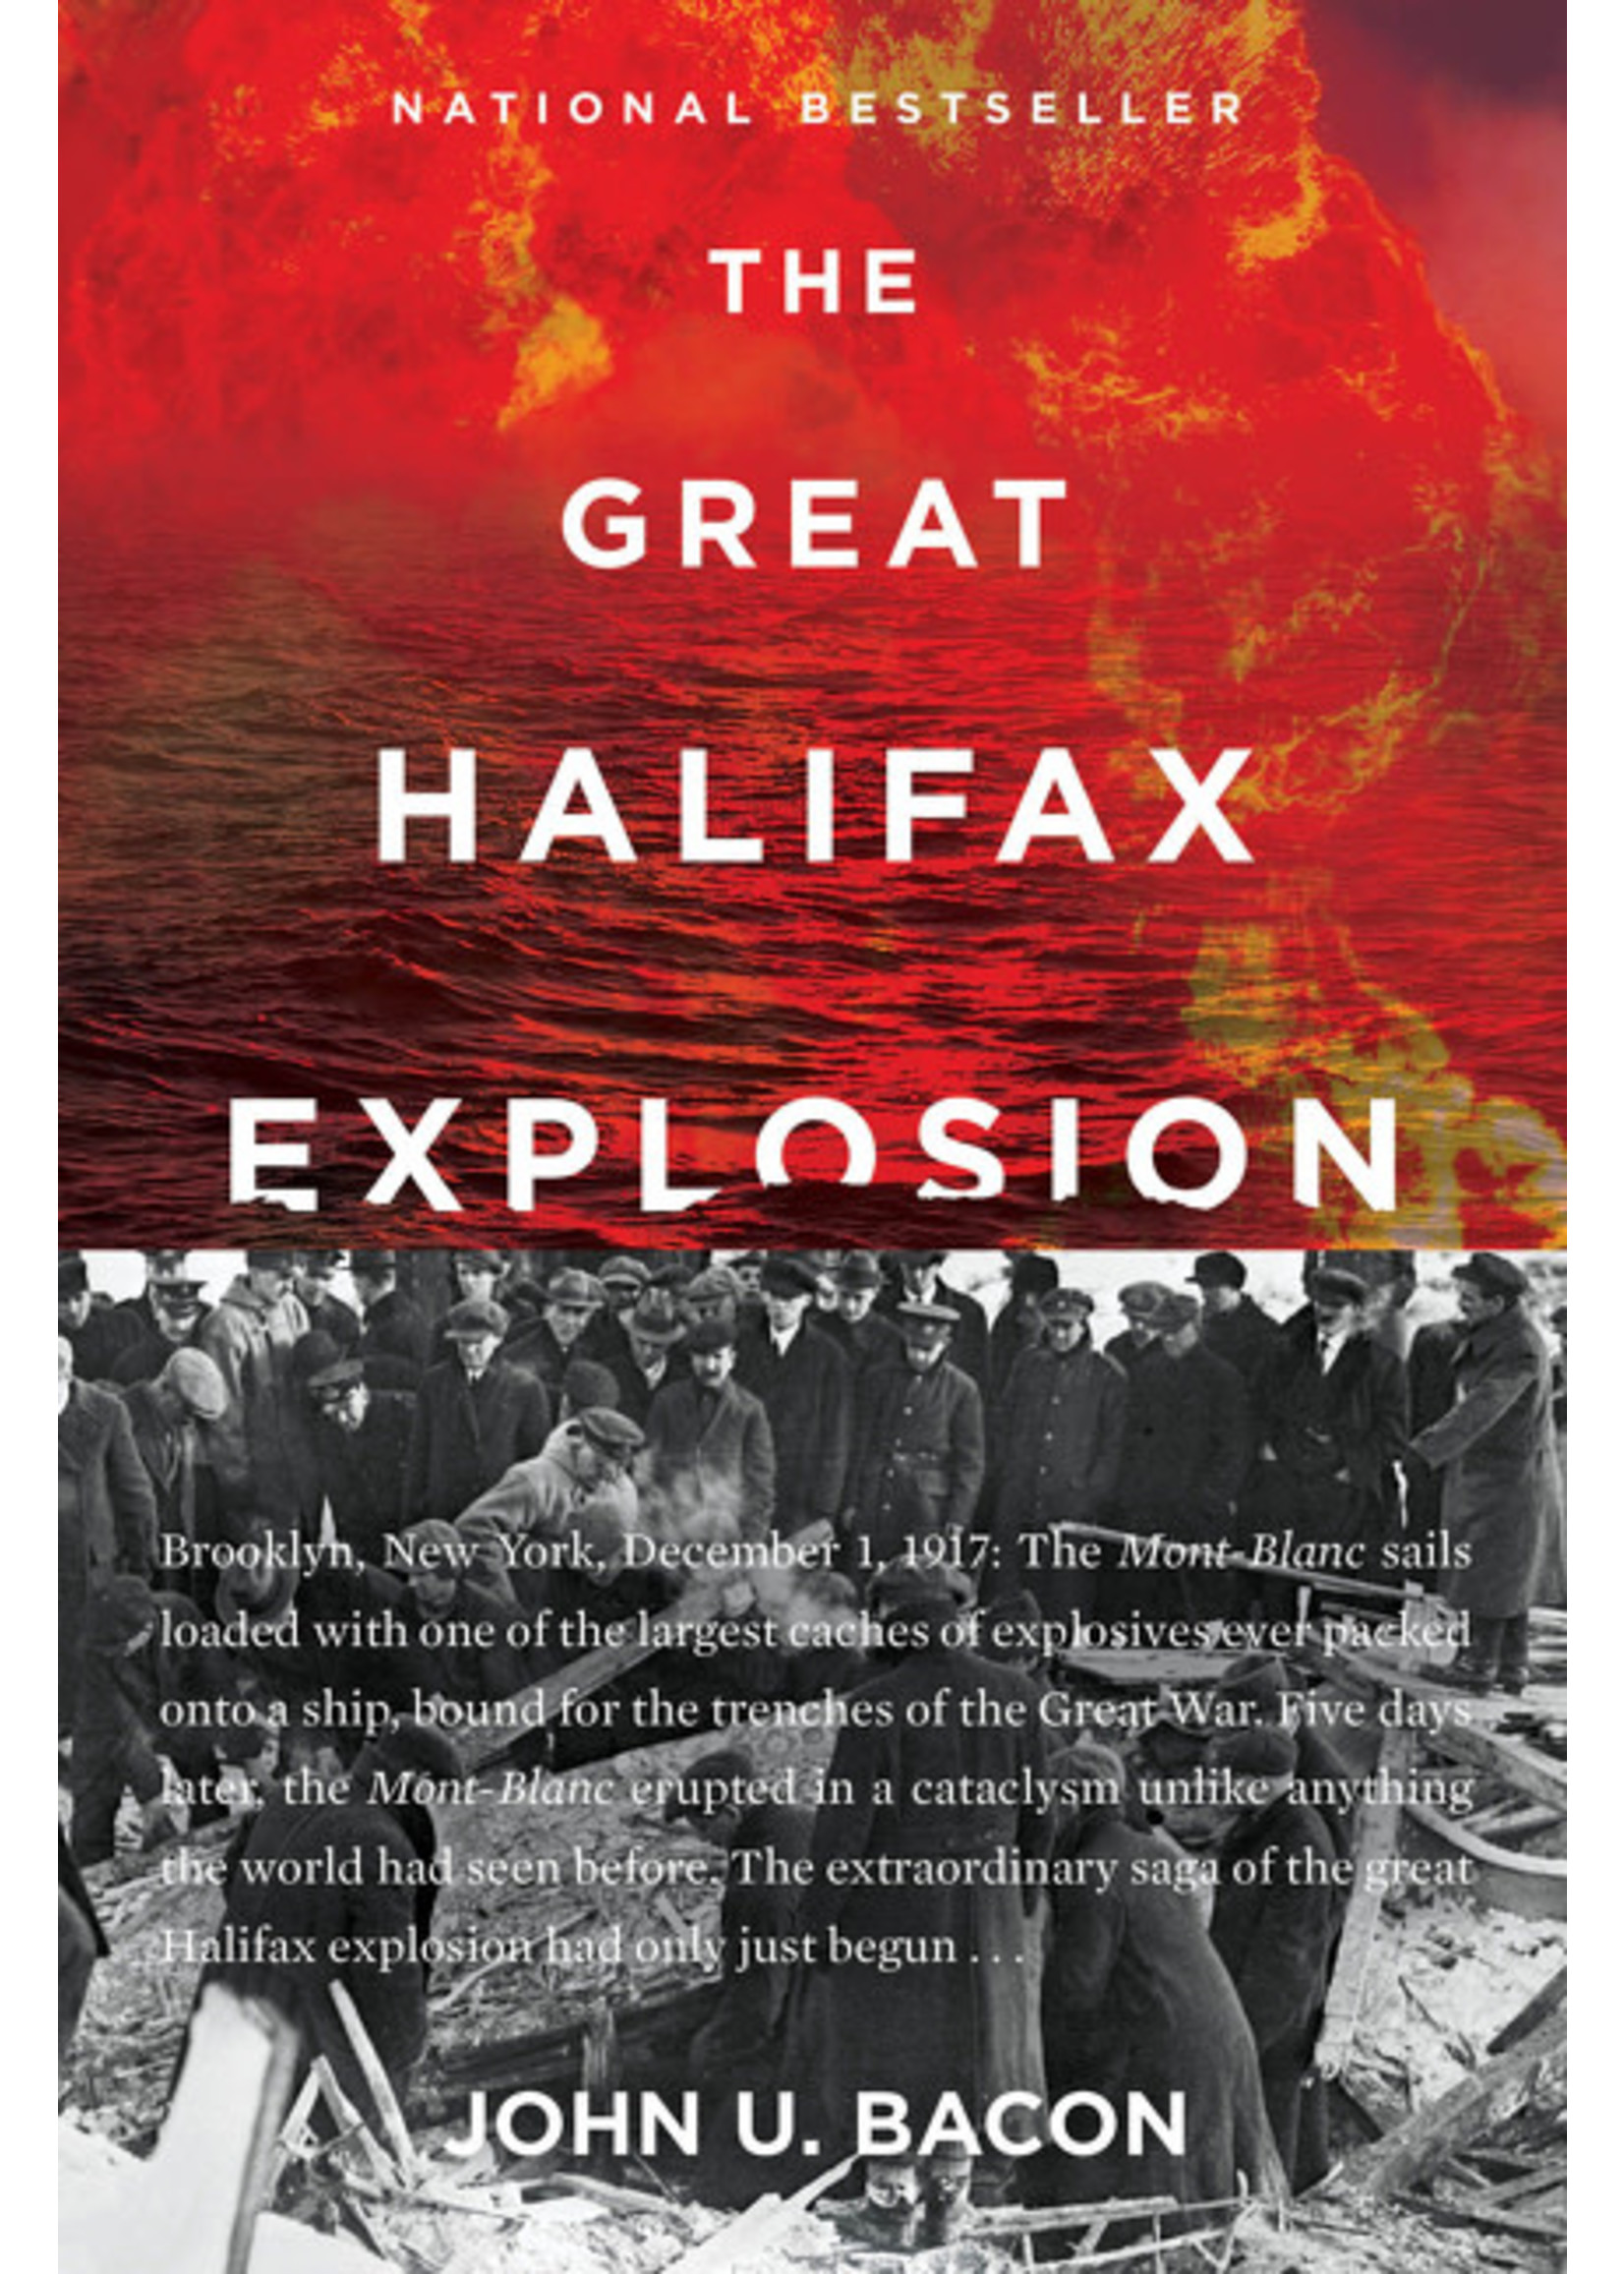 The Great Halifax Explosion: A World War I Story of Treachery, Tragedy, and Extraordinary Heroism by John U. Bacon